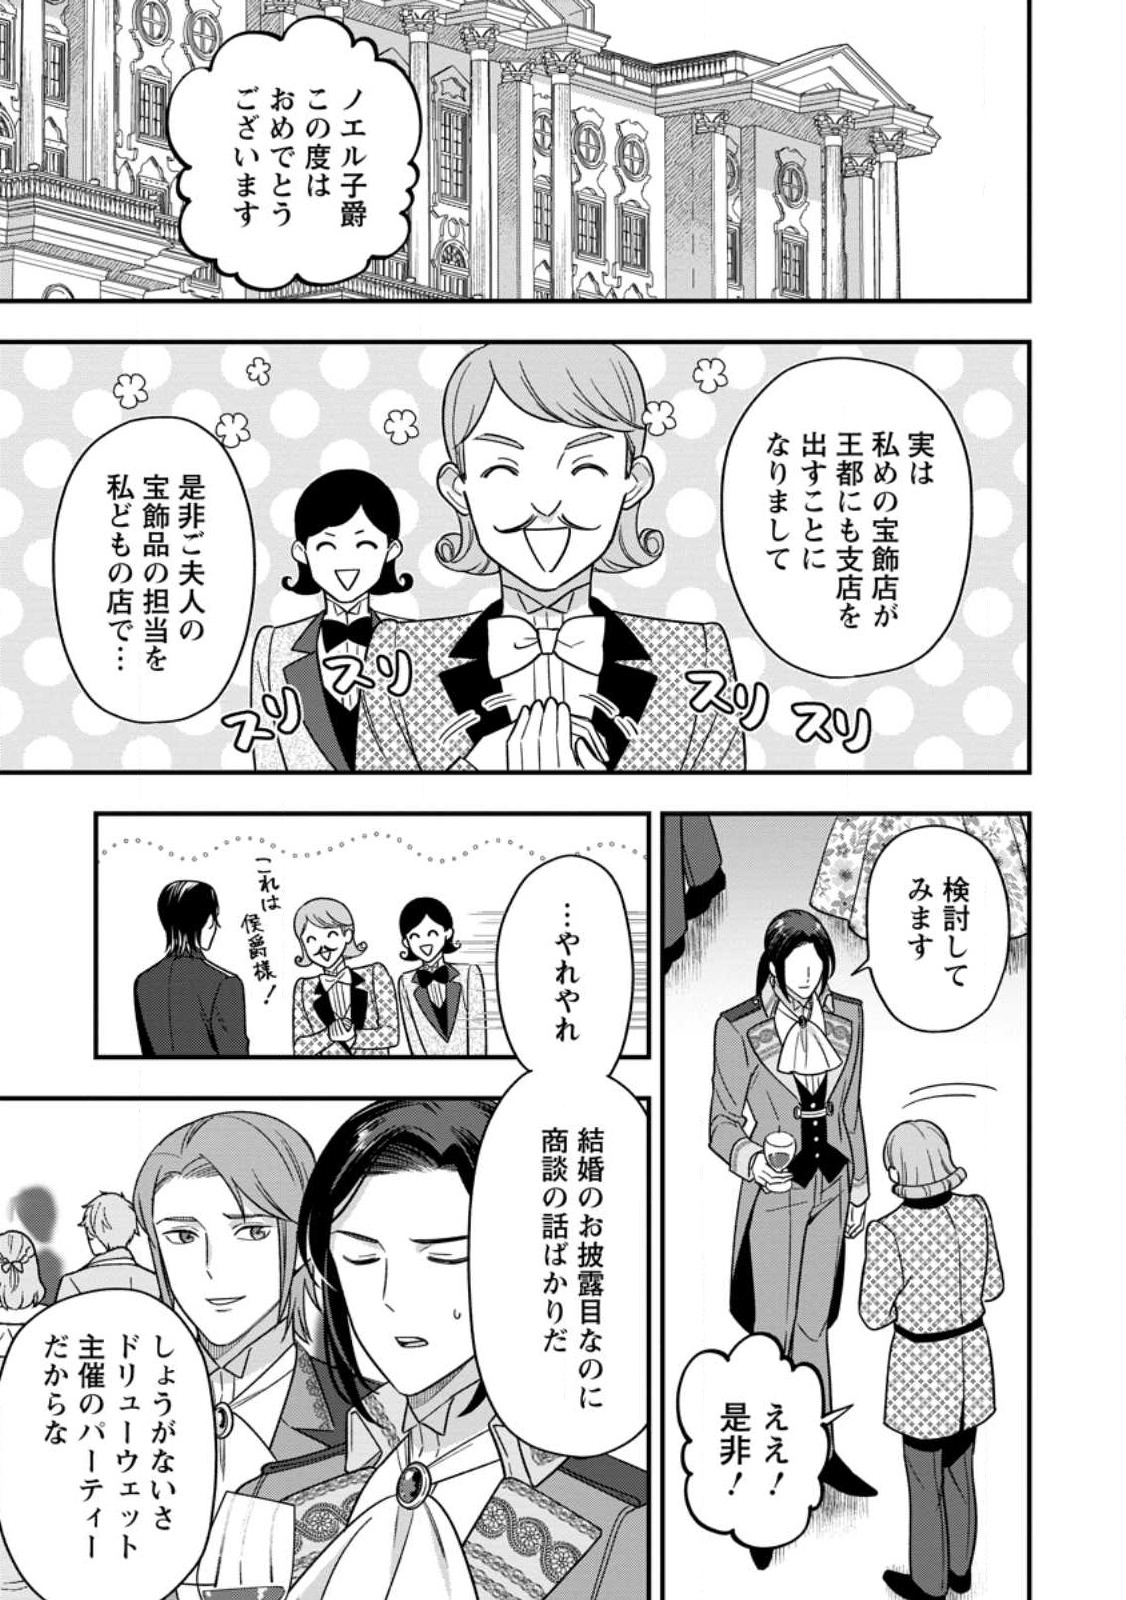 Aisanai to Iwaremashite mo - Chapter 12.1 - Page 1